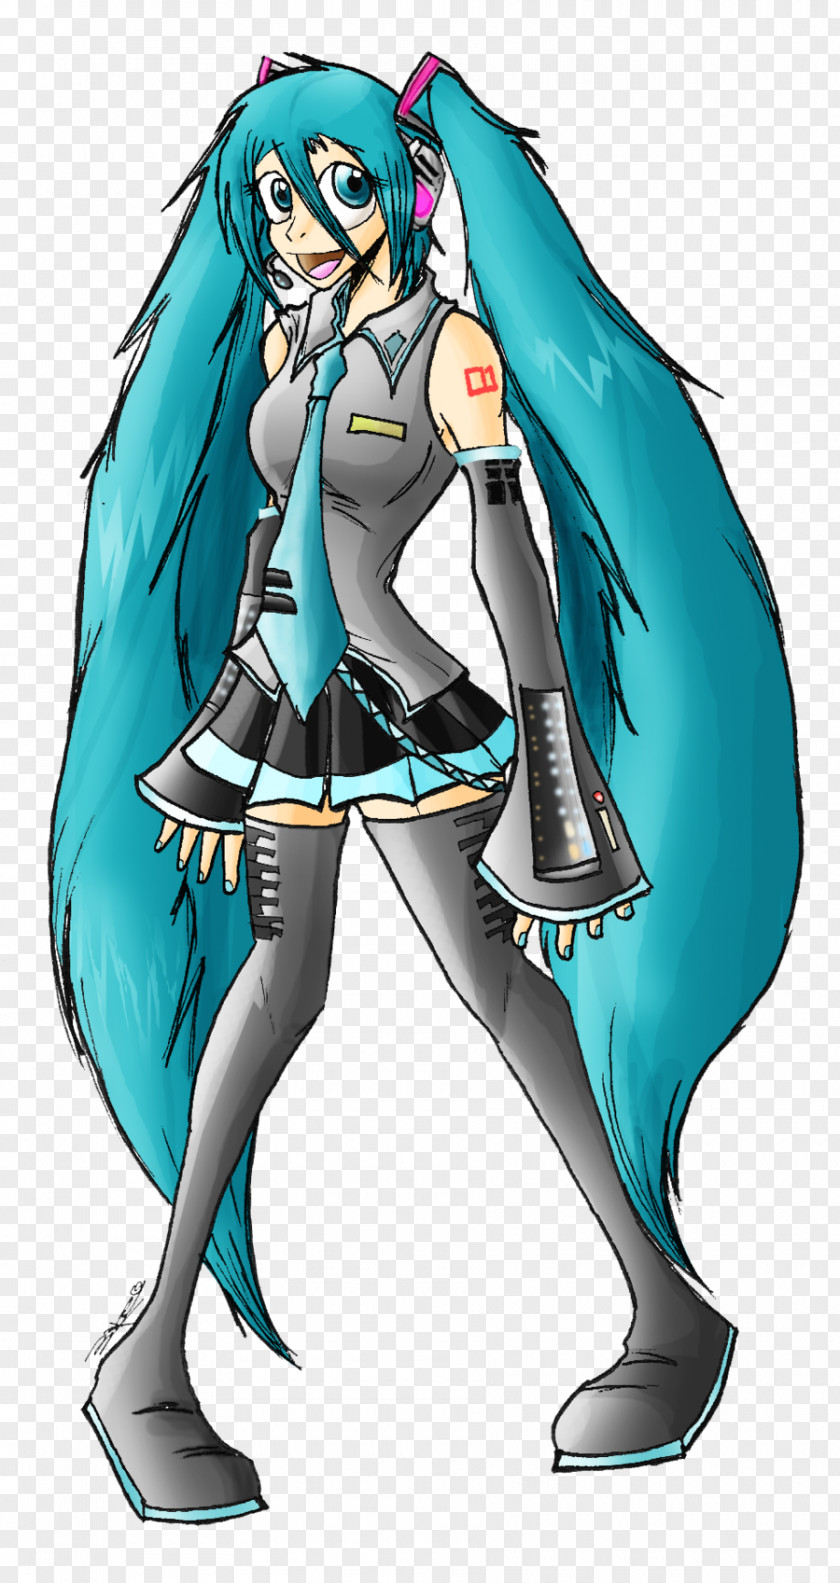 Cyborg Hatsune Miku Cyberpunk Character Turquoise PNG